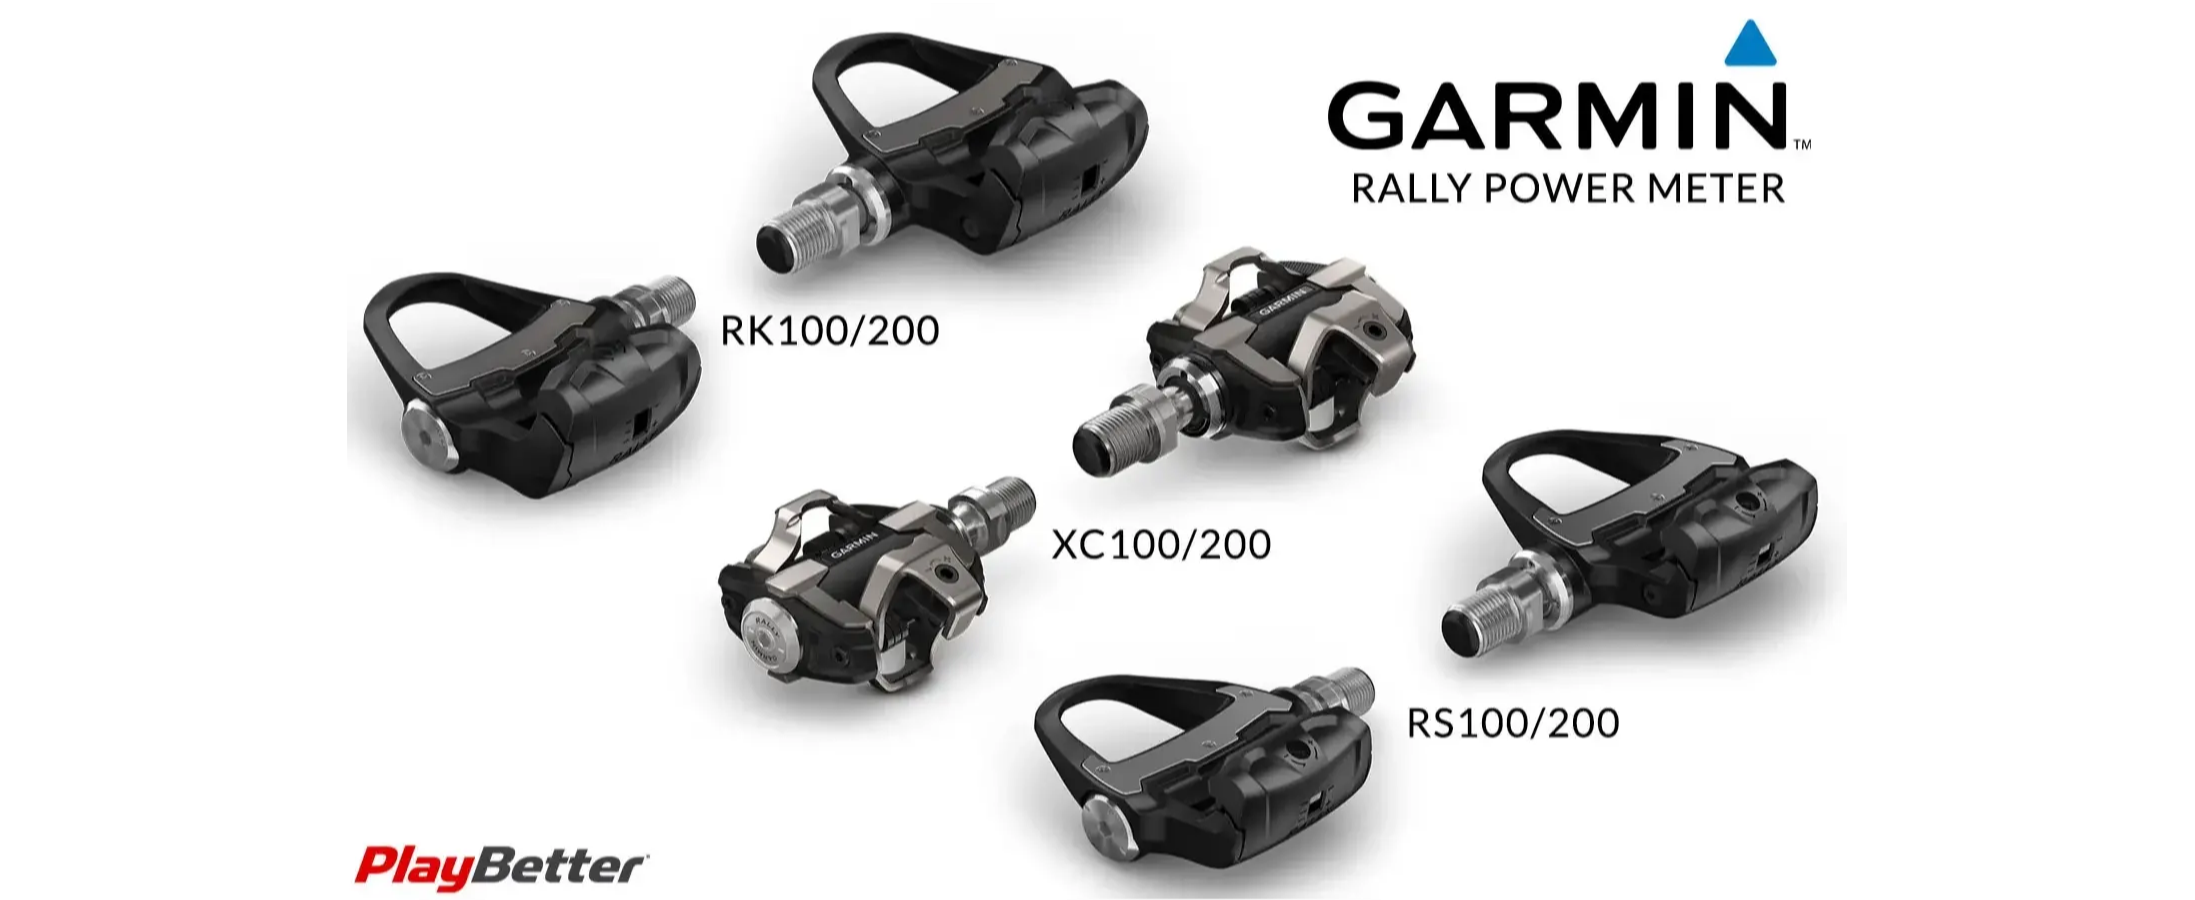 Garmin Rally Power Meter Pedals